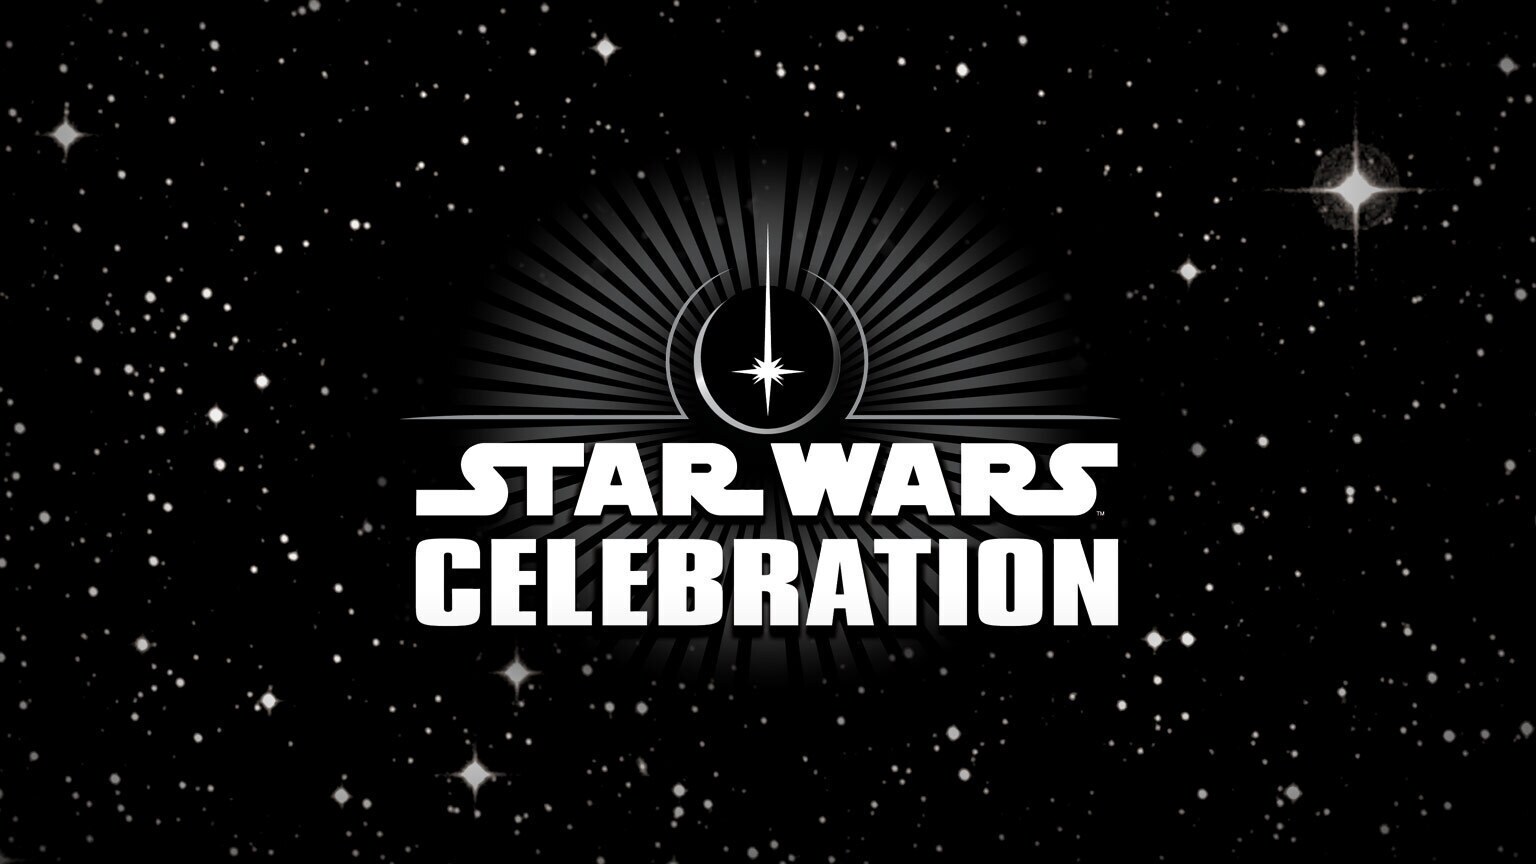 An Update on Star Wars Celebration 2020